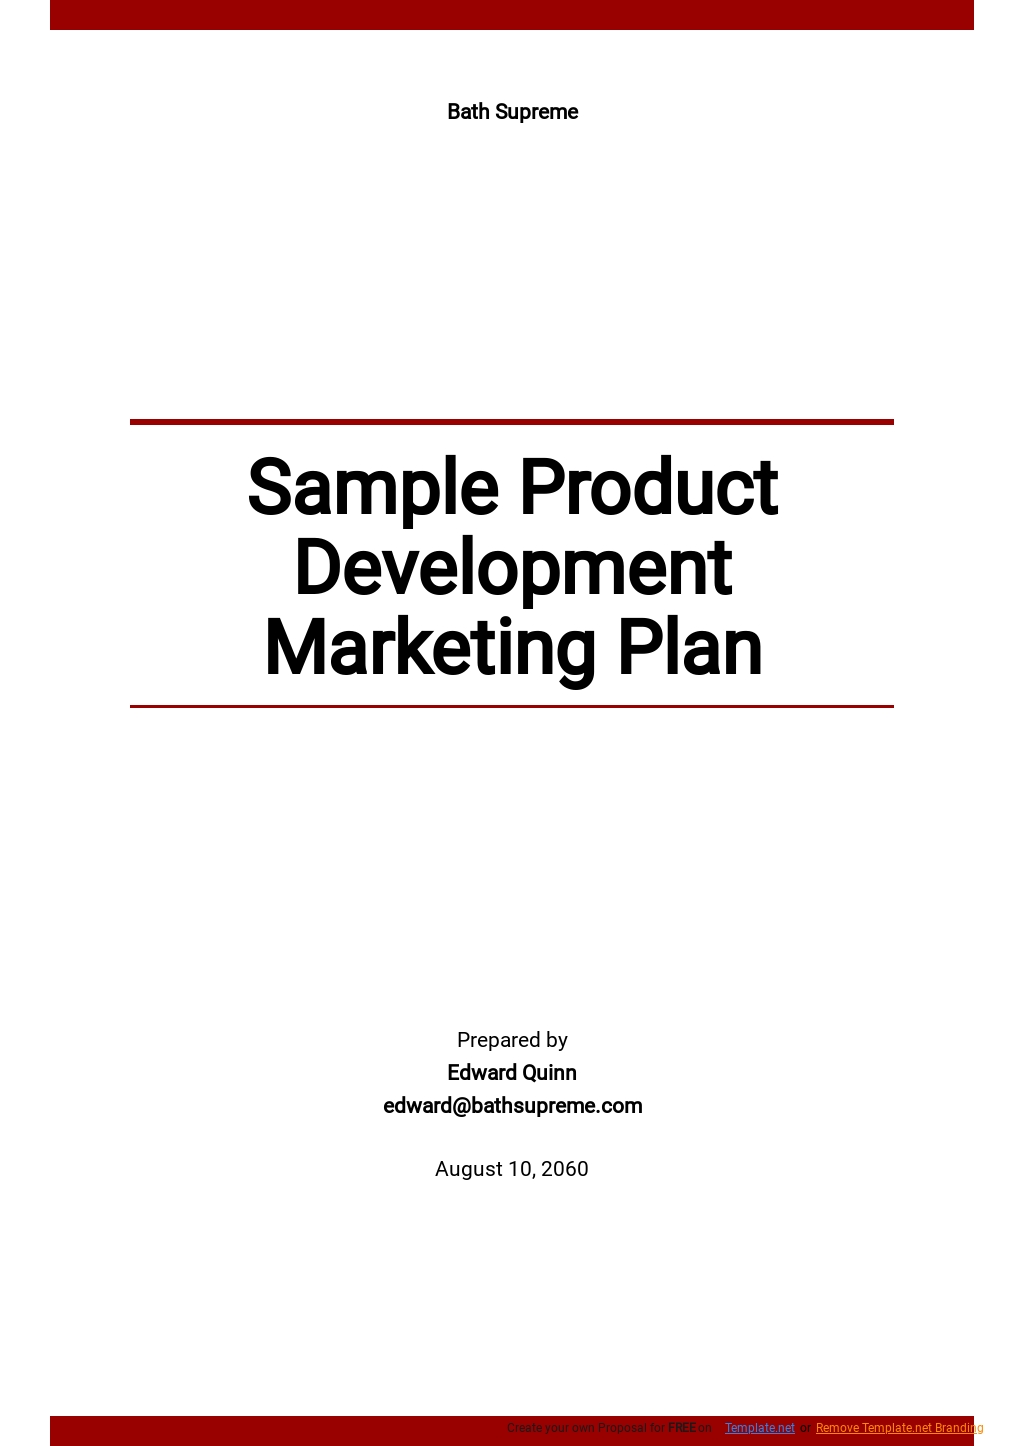 Free Sample Product Development Marketing Plan Template 